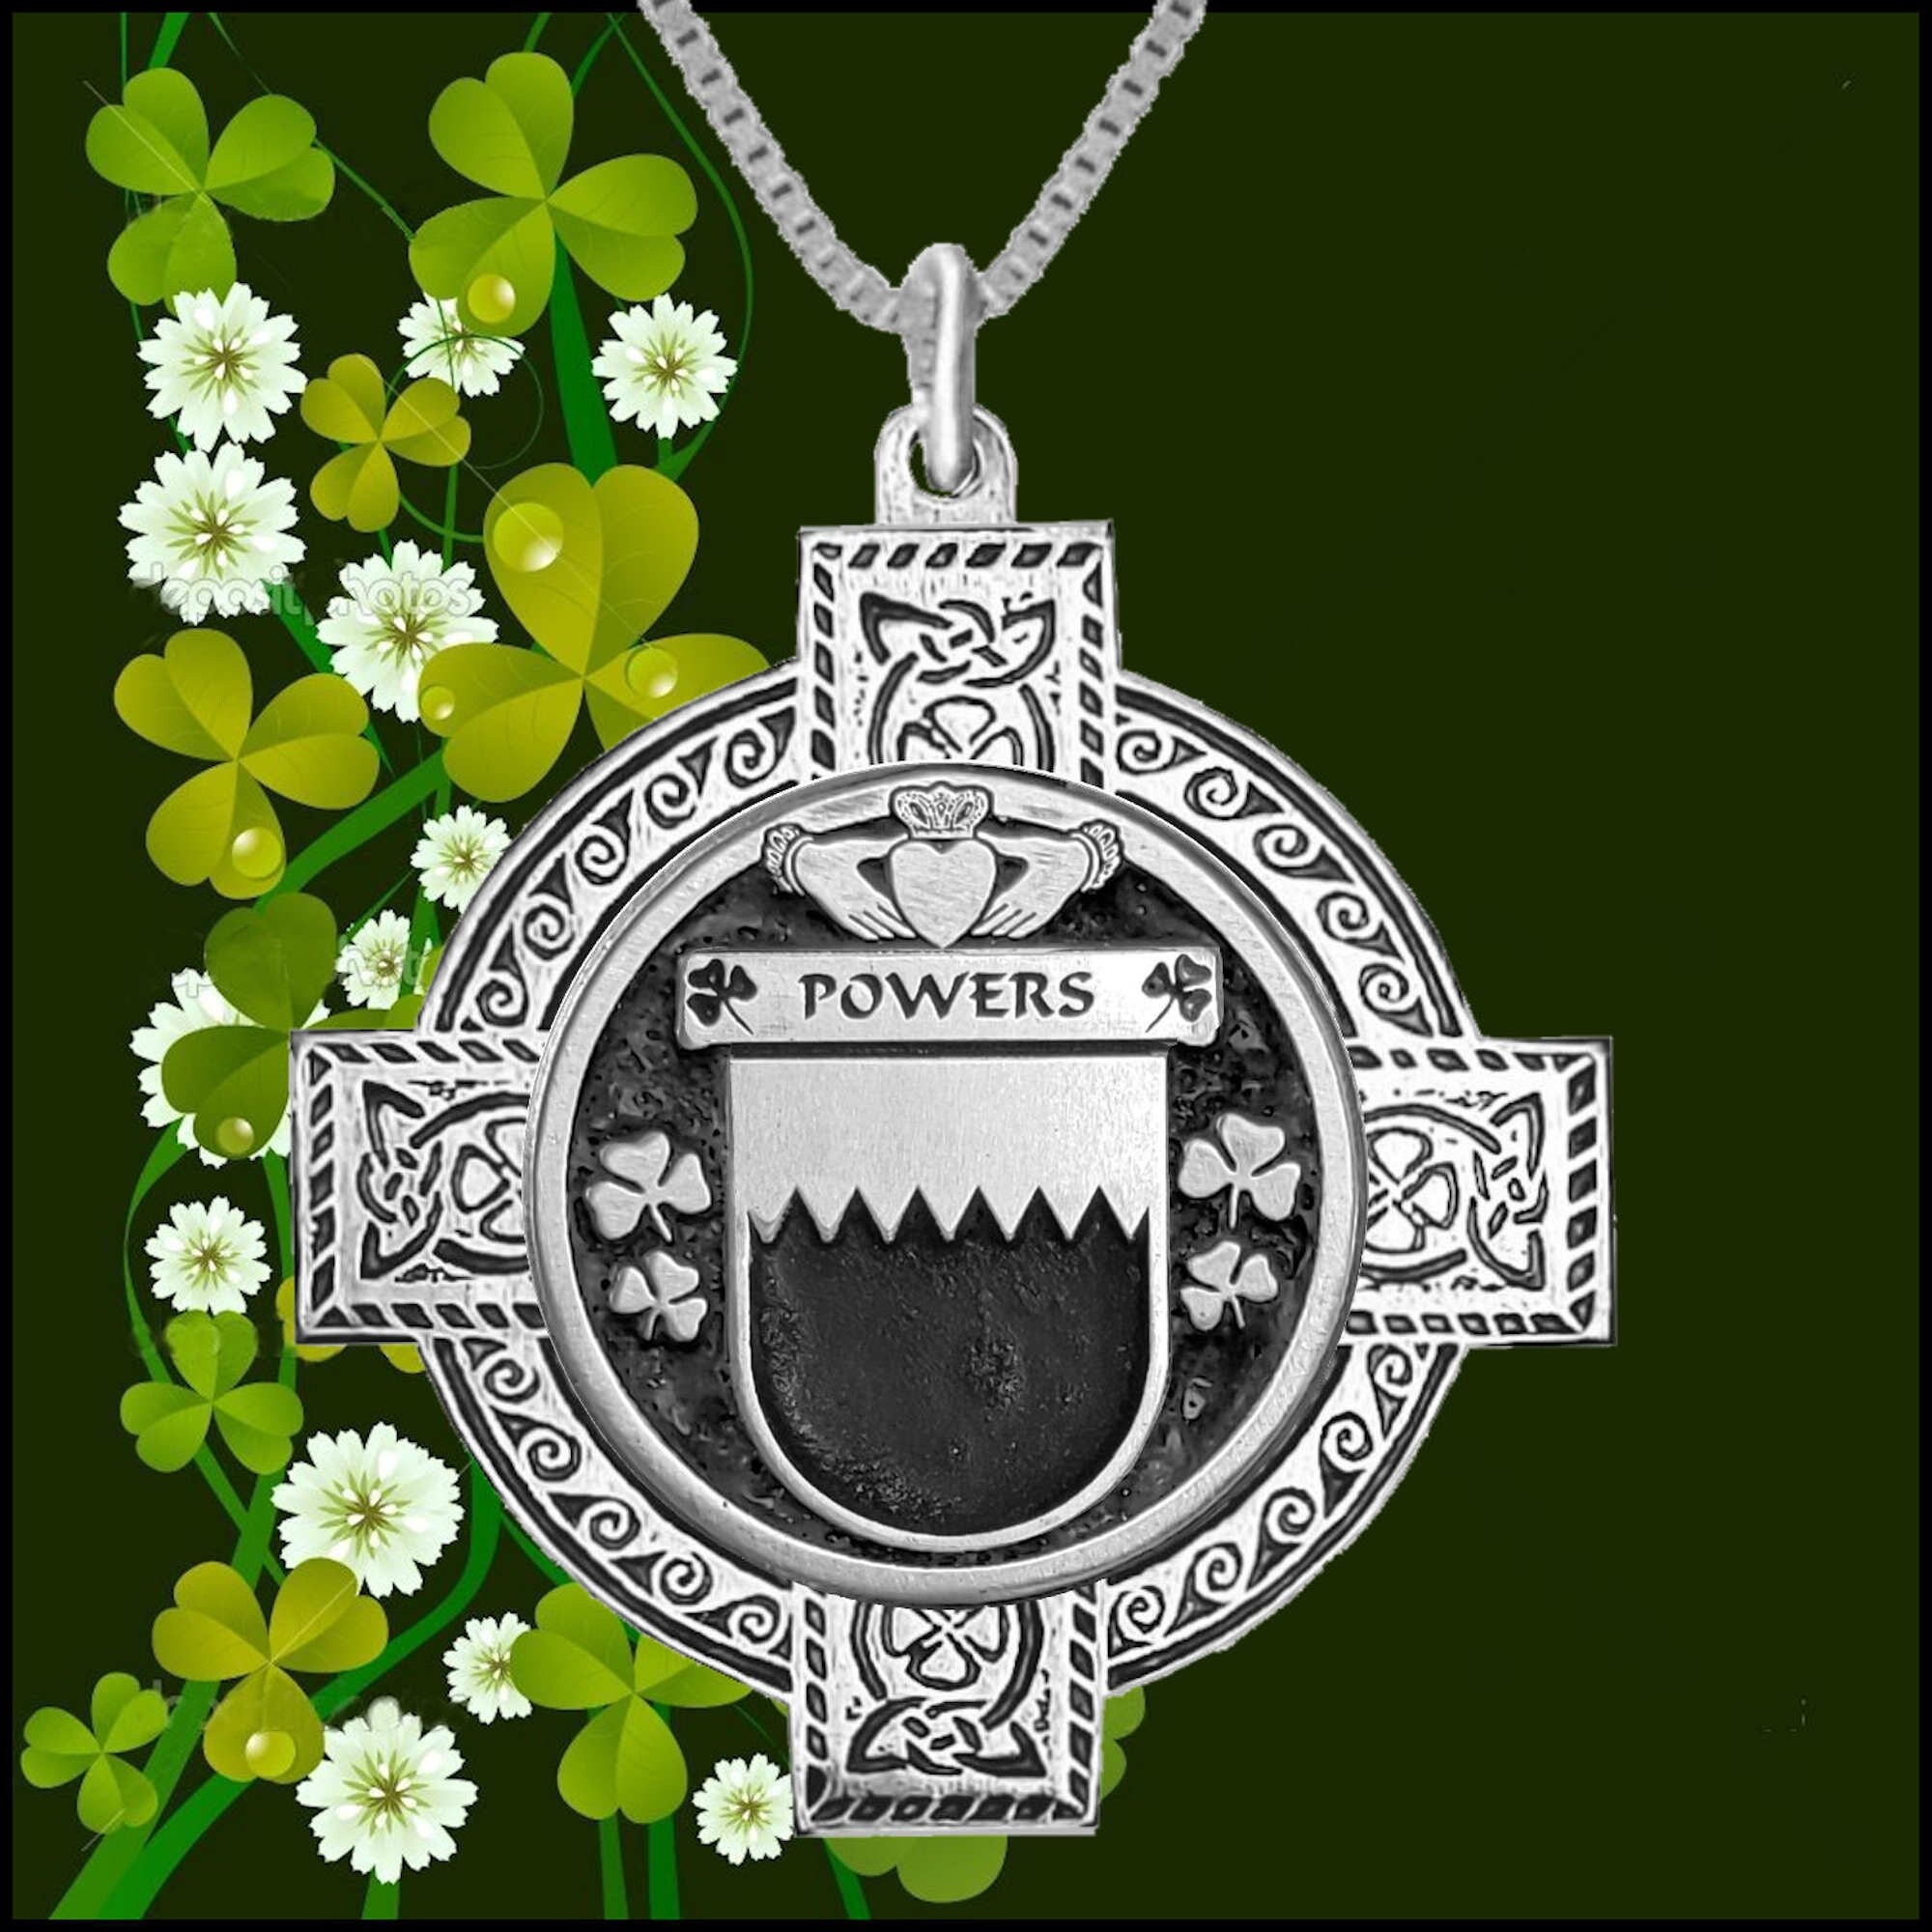 Powers Irish Coat of Arms Celtic Cross Pendant ~ IP04